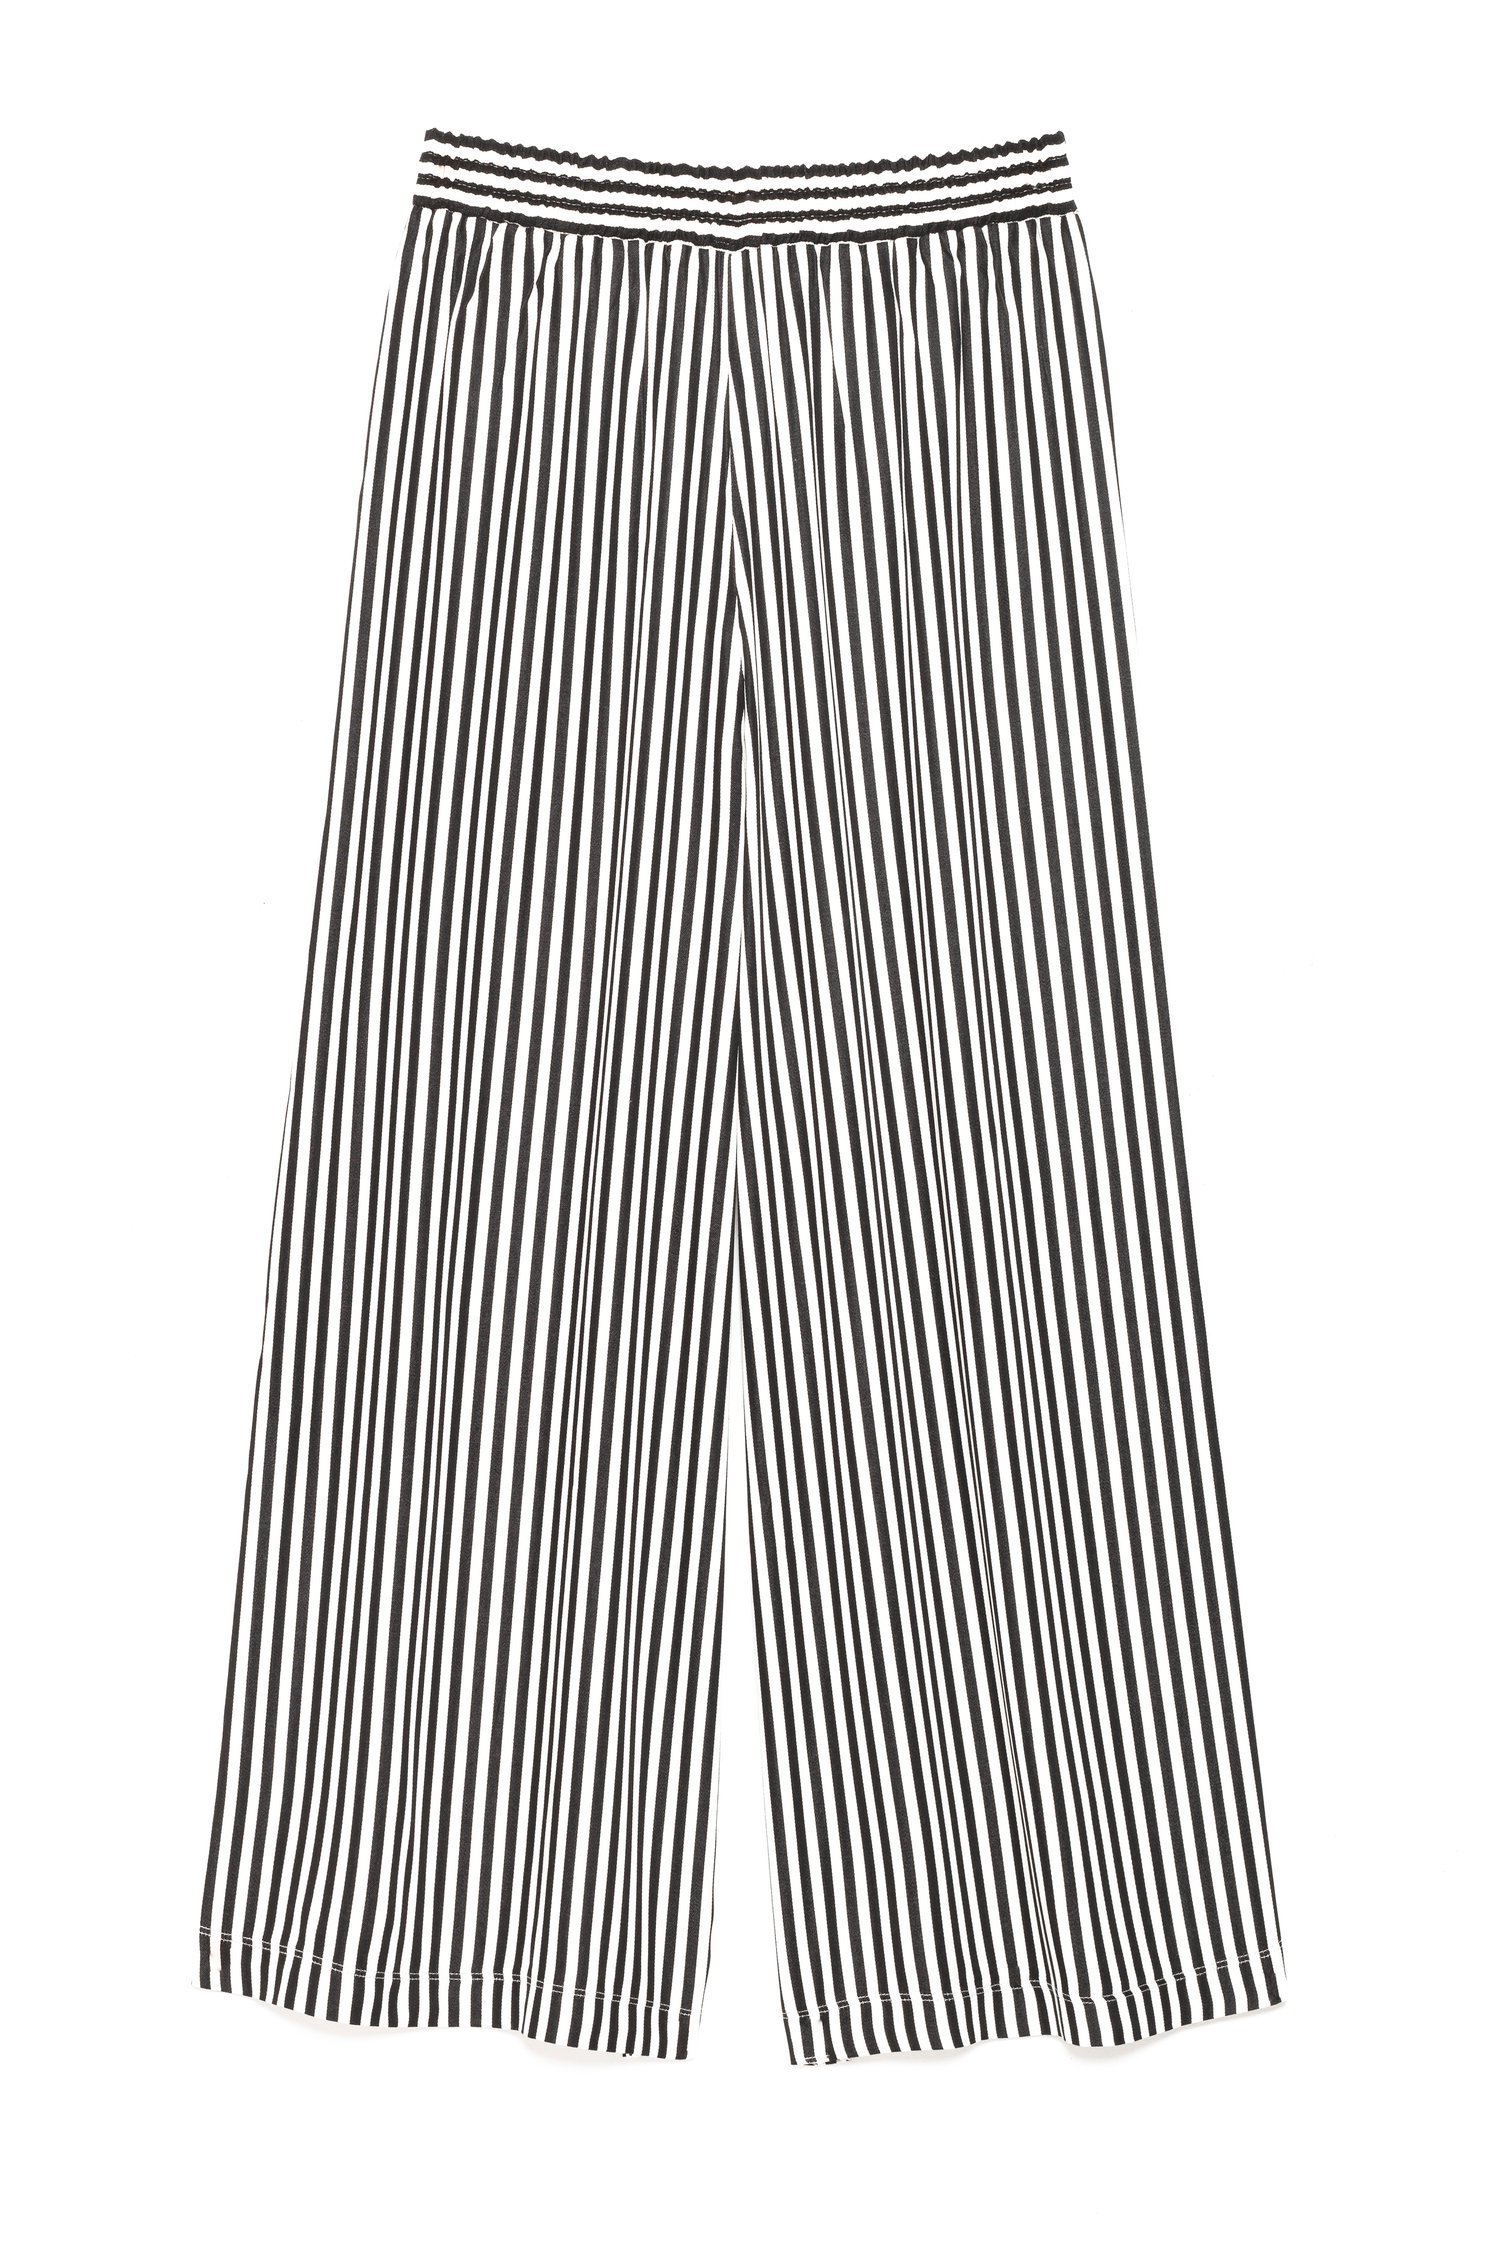 Image of Pantalon large twill OSCAR RAYÉ Ecru-noir 119€ -50%